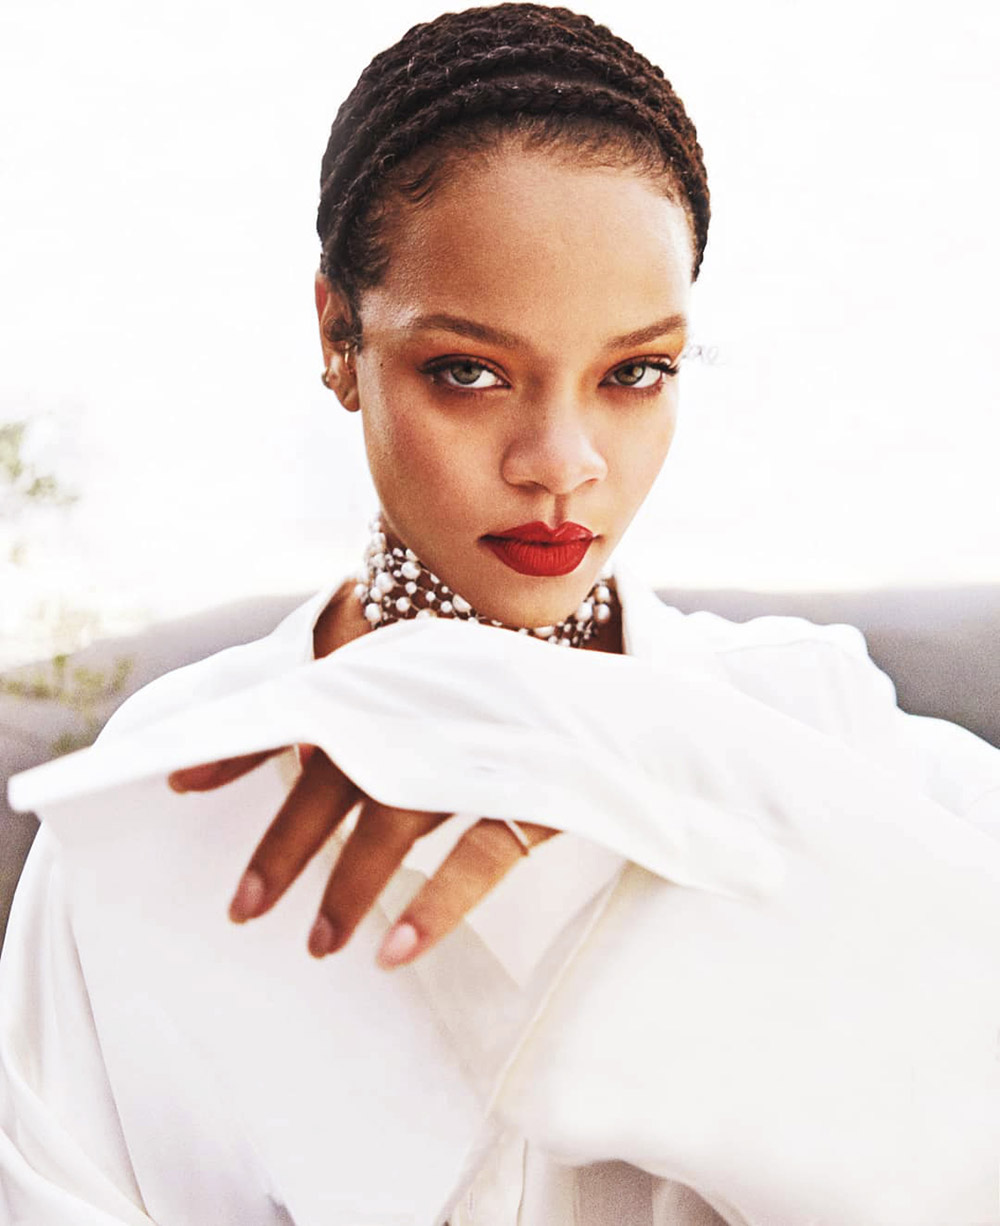 Rihanna covers Harper’s Bazaar US & UK September 2020 by Gray Sorrenti